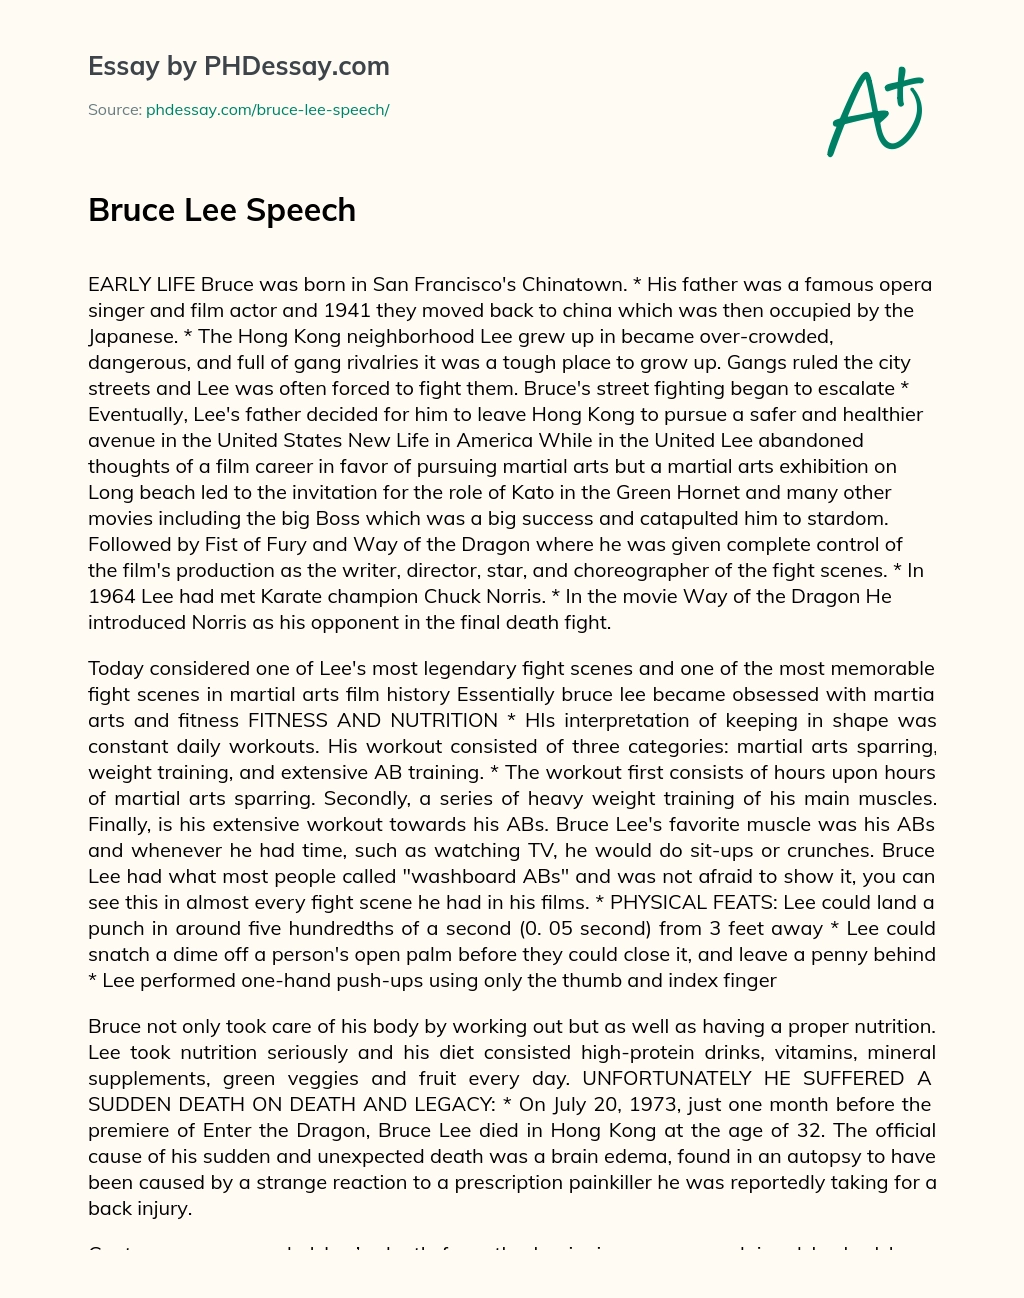 Bruce Lee Speech essay